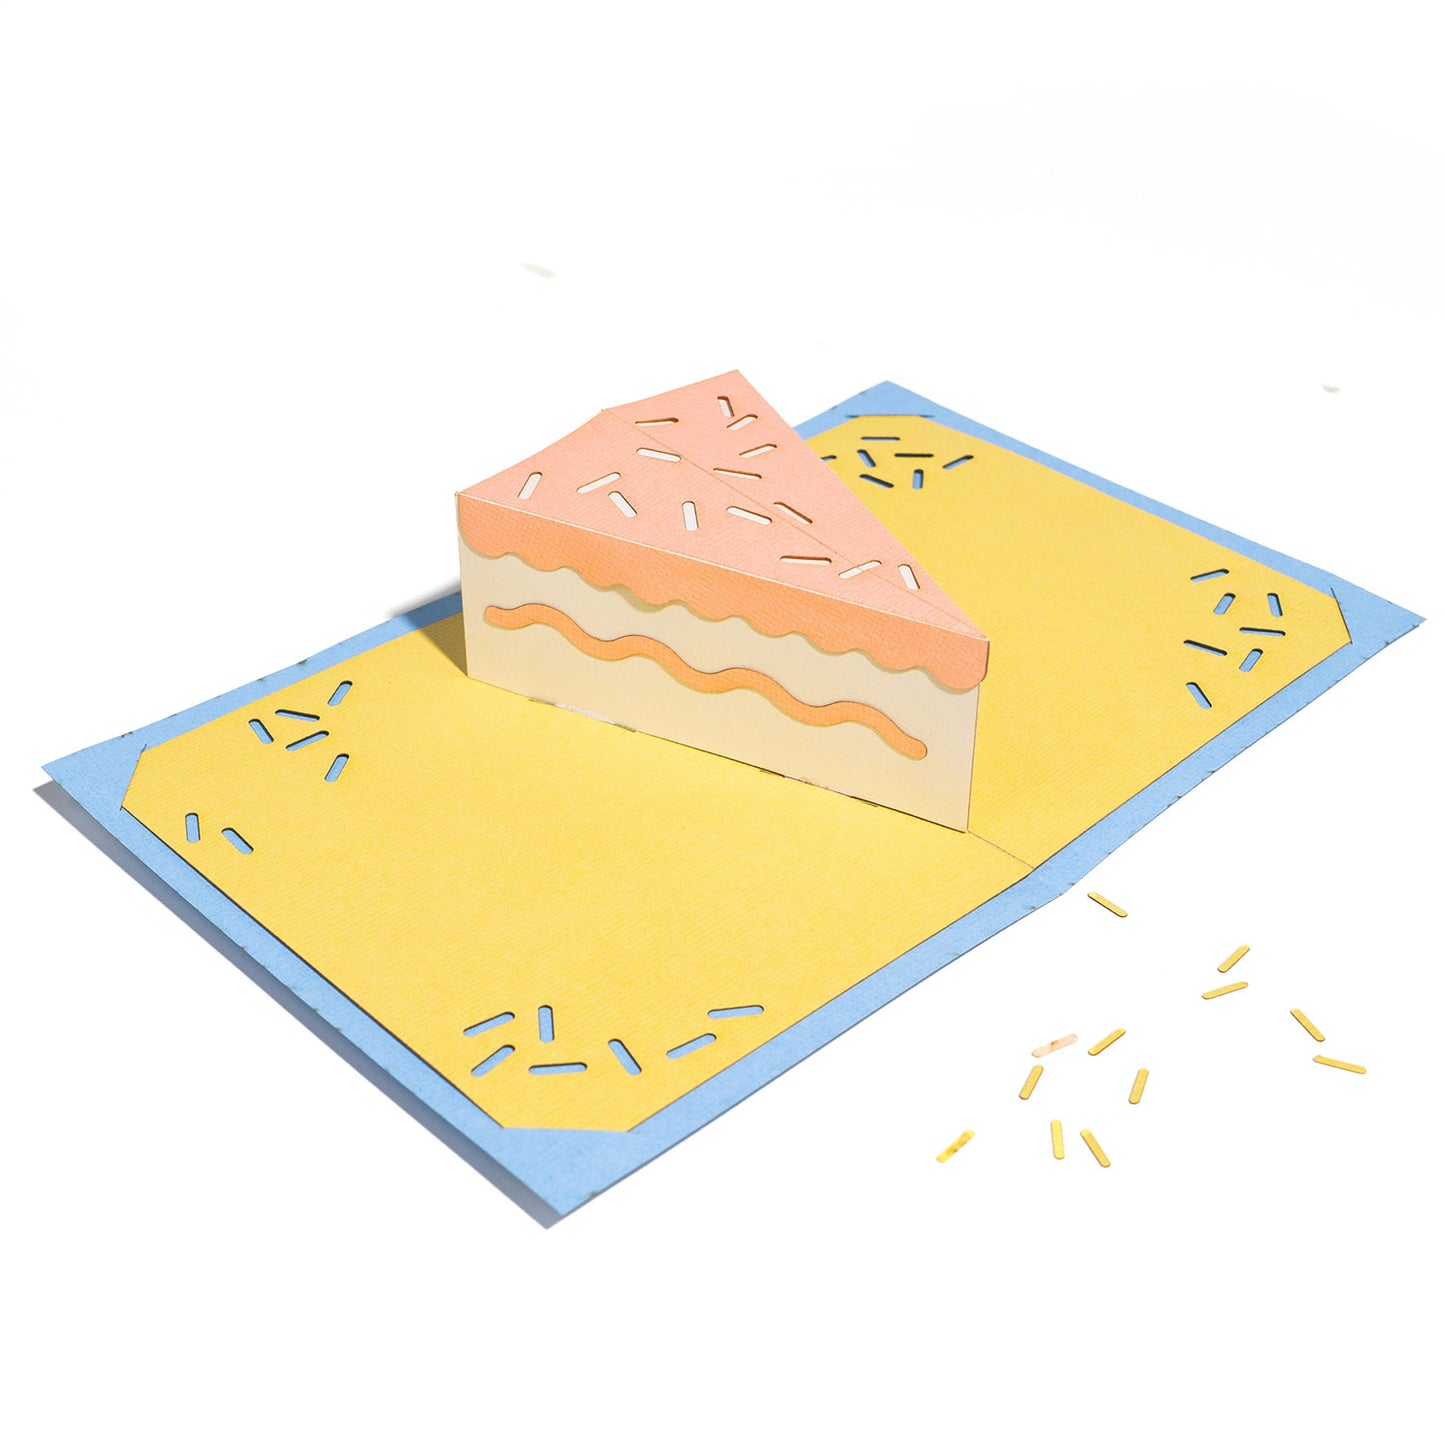 “Let’s Celebrate” Pop-up Cake Greeting Card